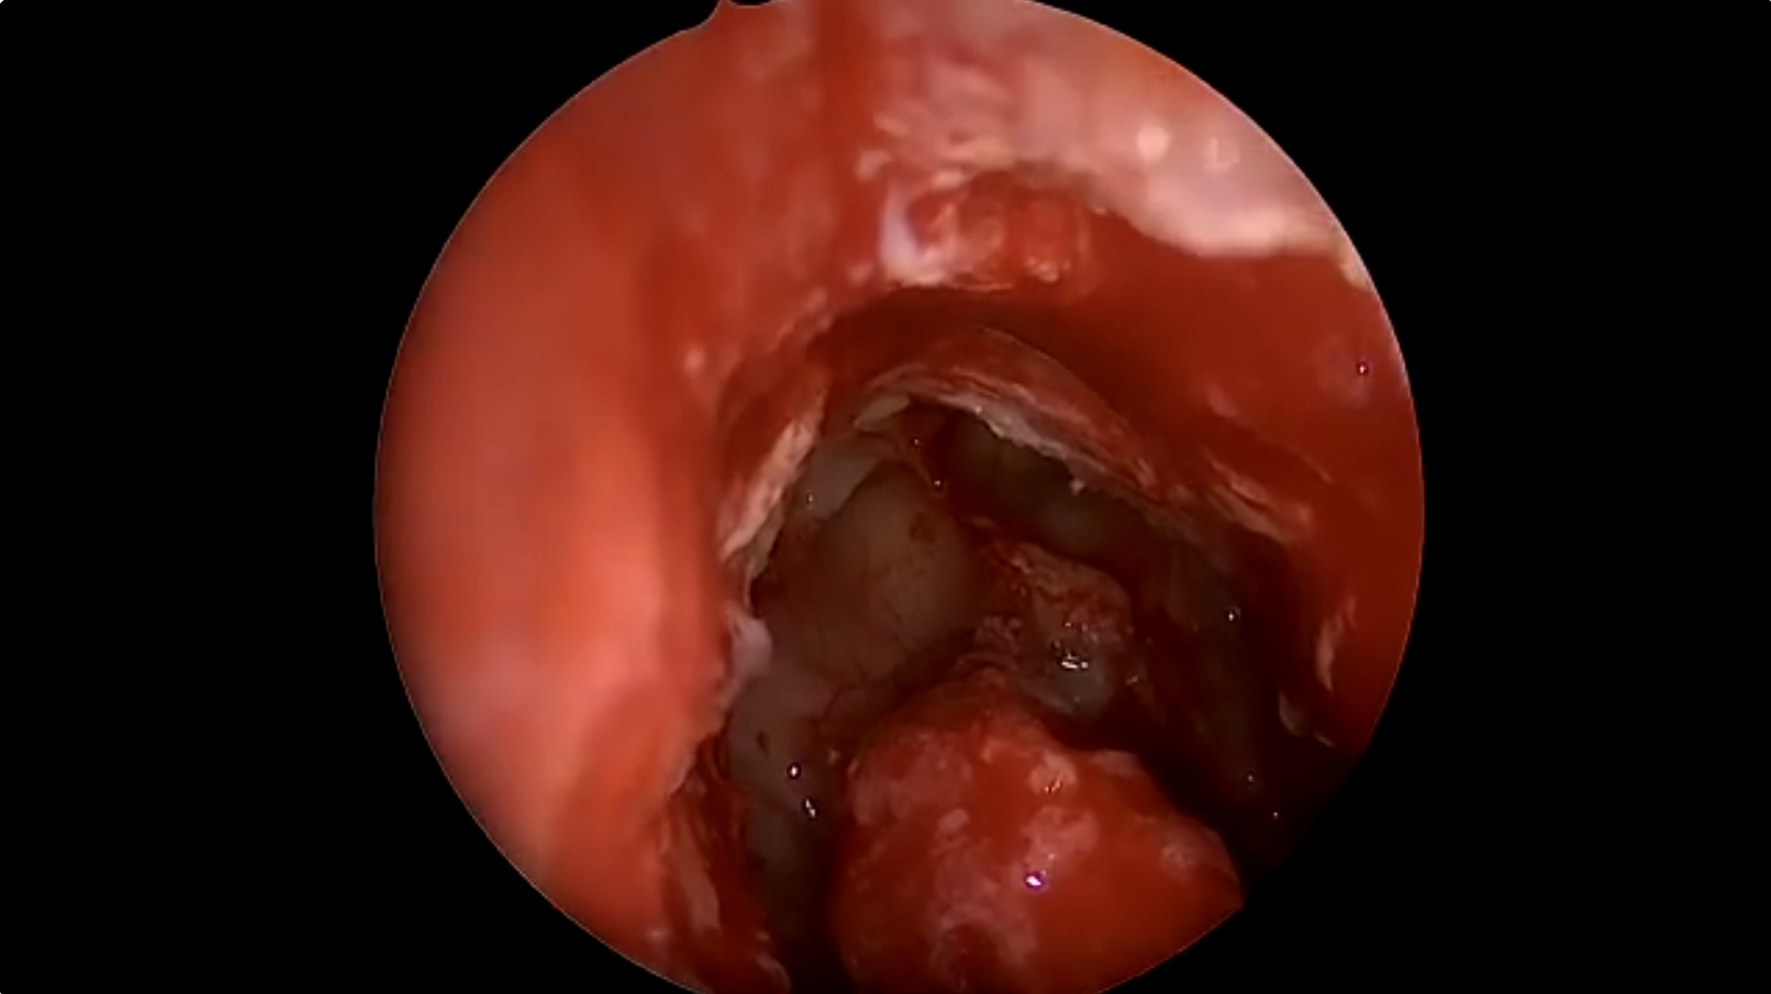 Frontal sinus surgery of the Lothrop video thumbnail.